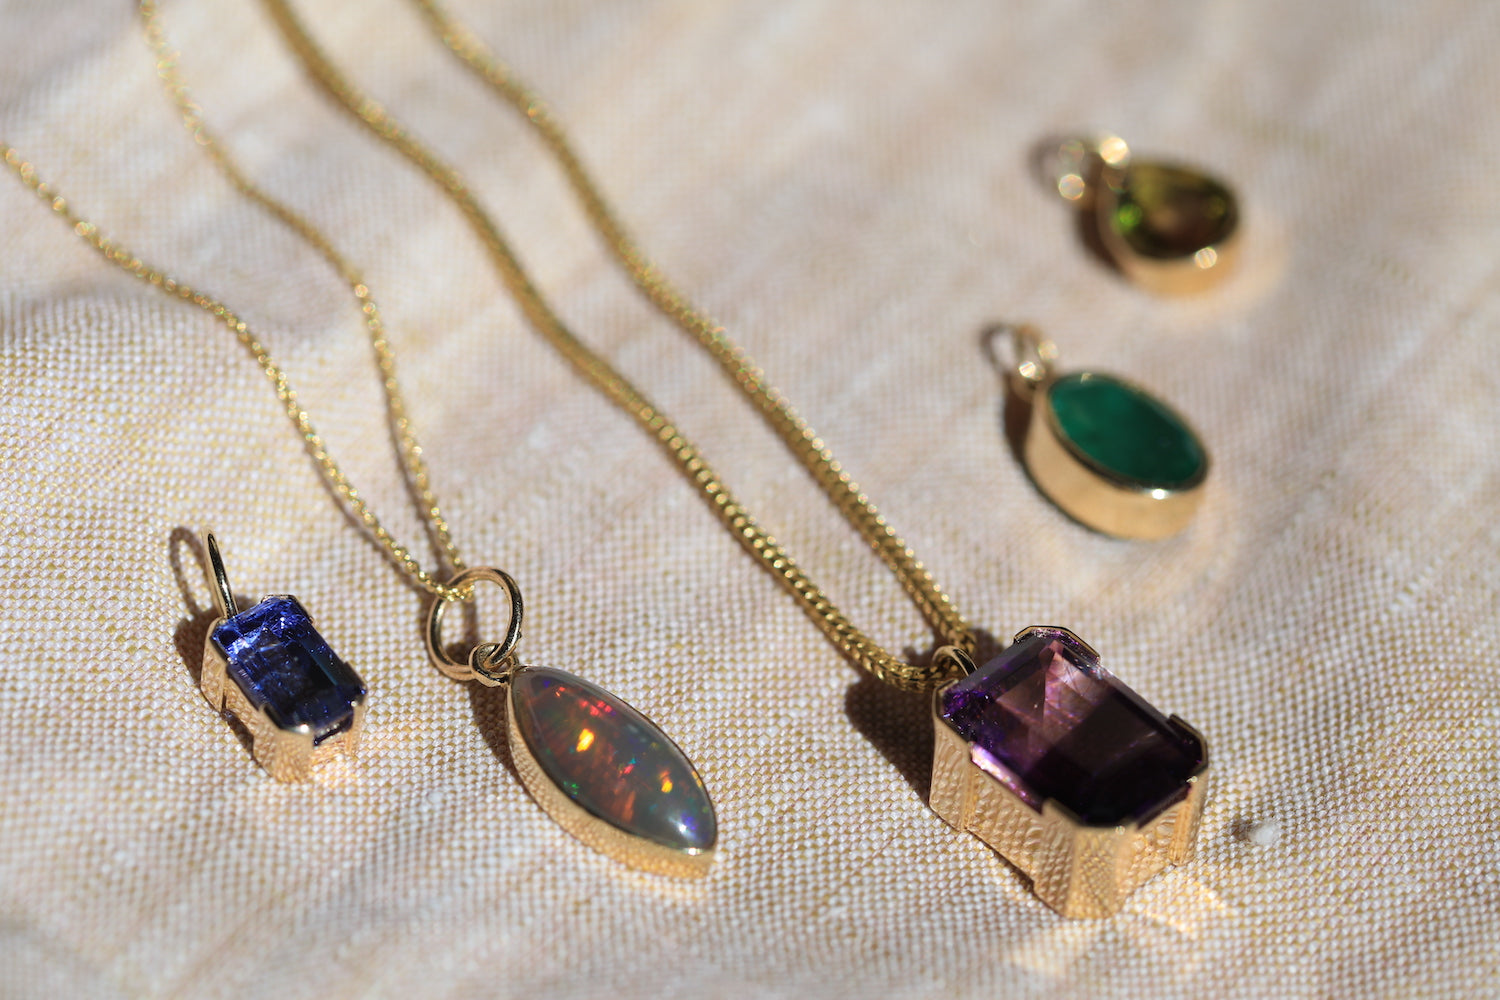 gemstone charm, pendants, fine jewelry necklaces brooklyn, new york, greenpoint